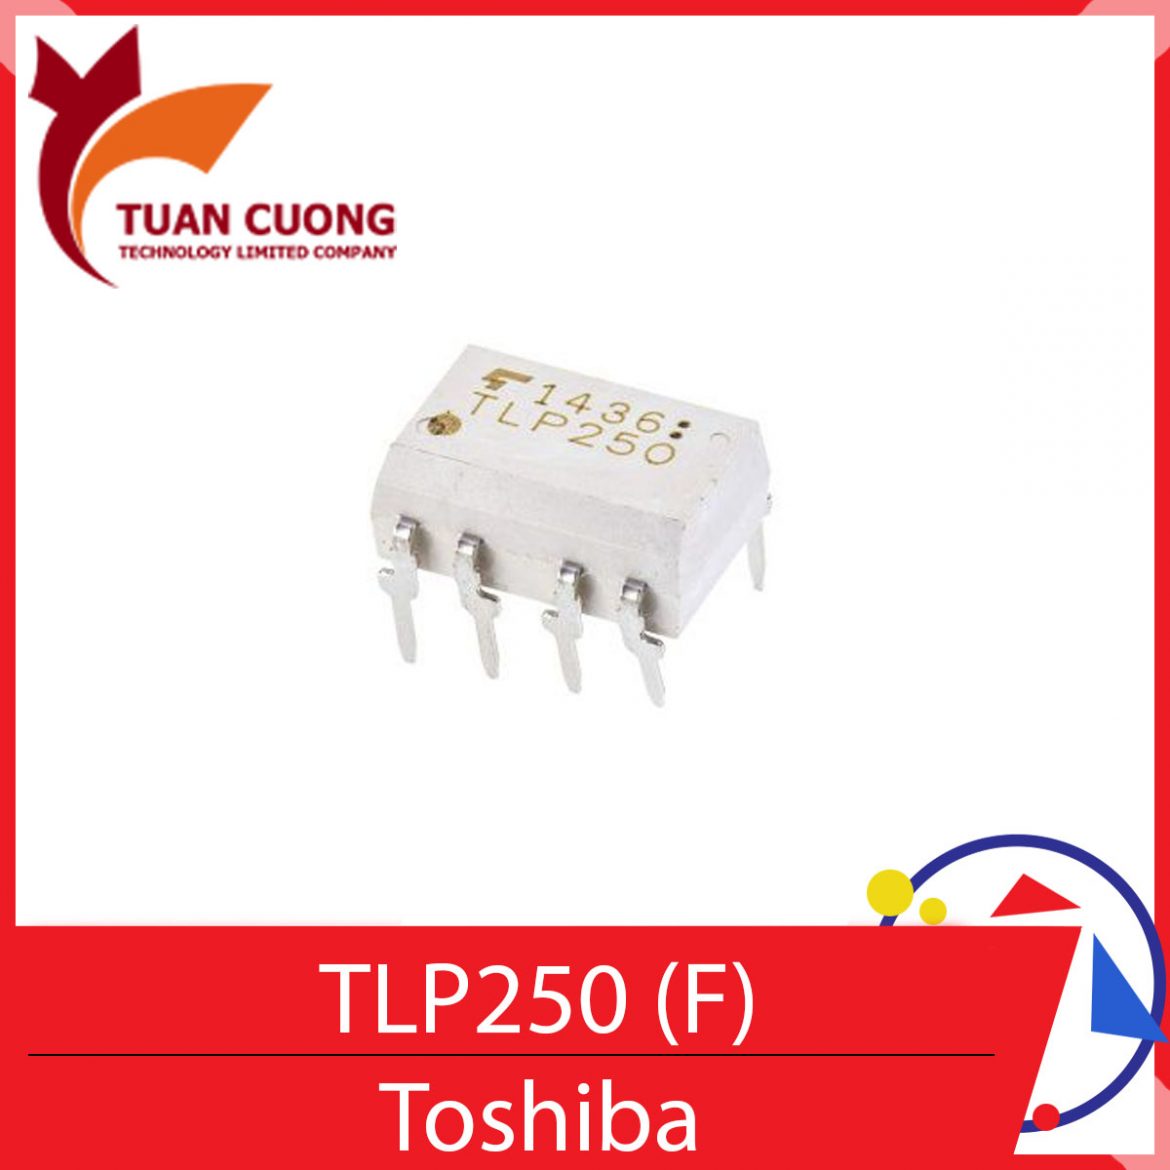 TLP250 (F) Toshiba